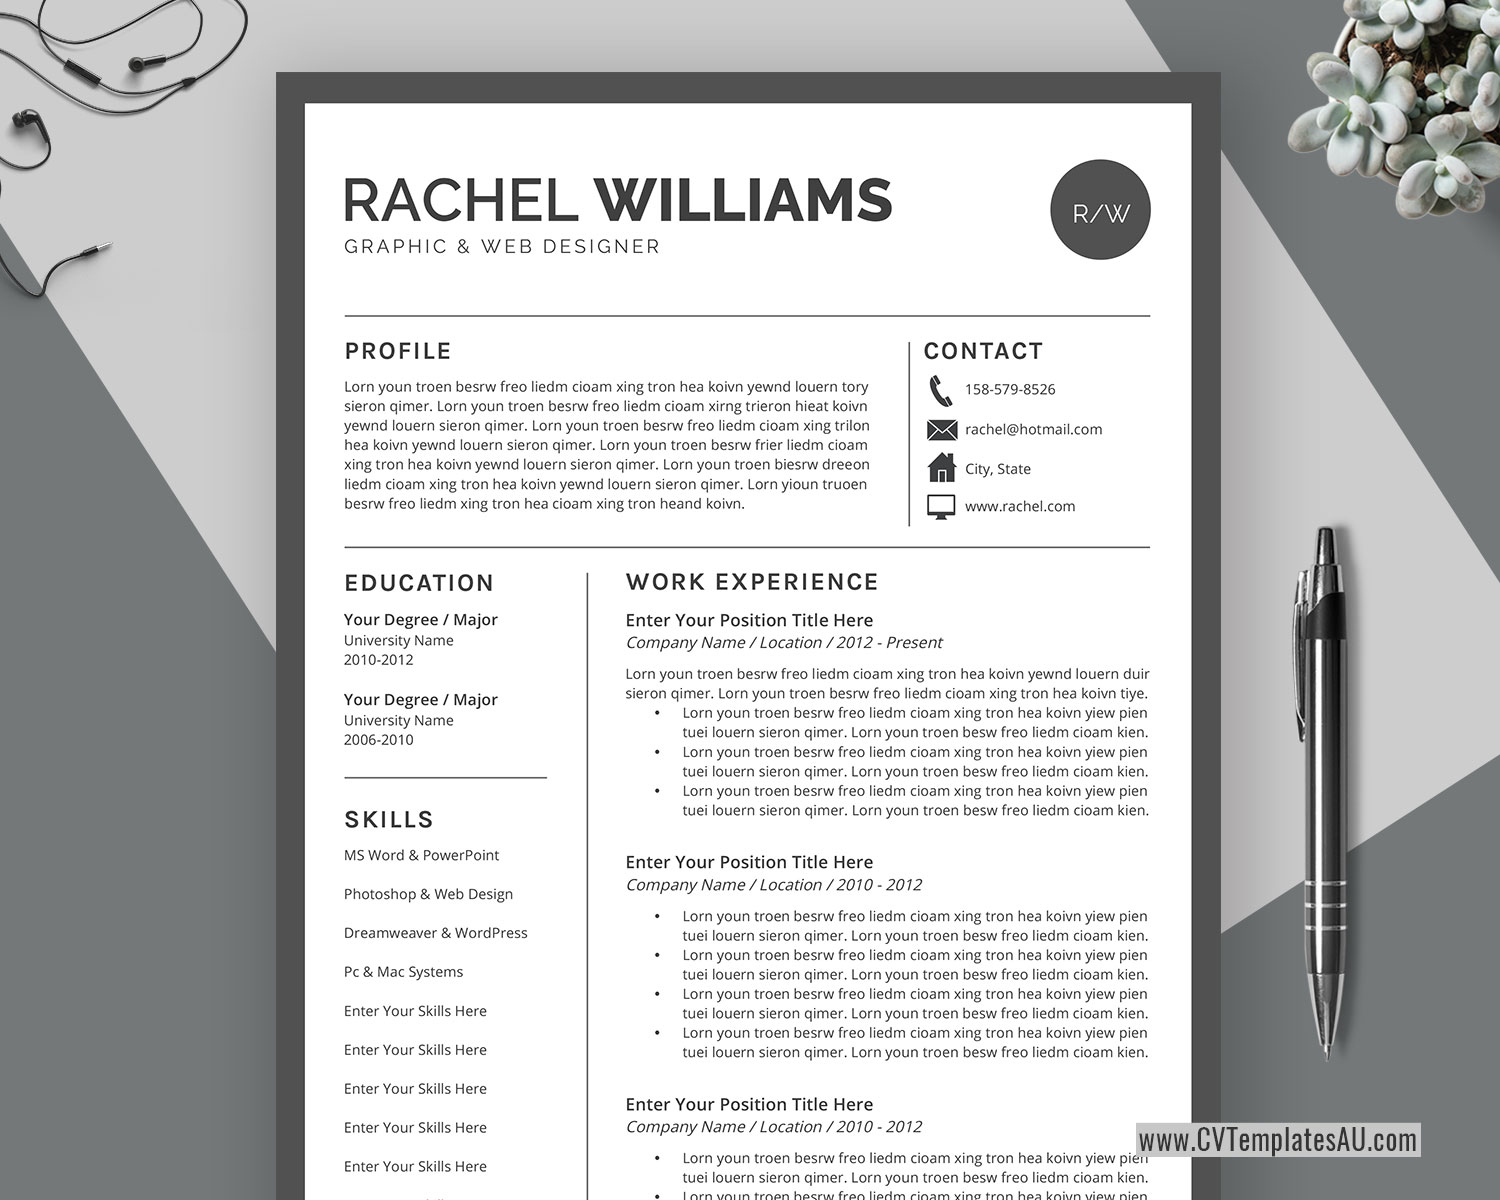 Professional Cv Template For Microsoft Word Cover Letter Curriculum Vitae Modern Resume 1 3 Page Resume Editable Resume Job Winning Resume Instant Download Cvtemplatesau Com